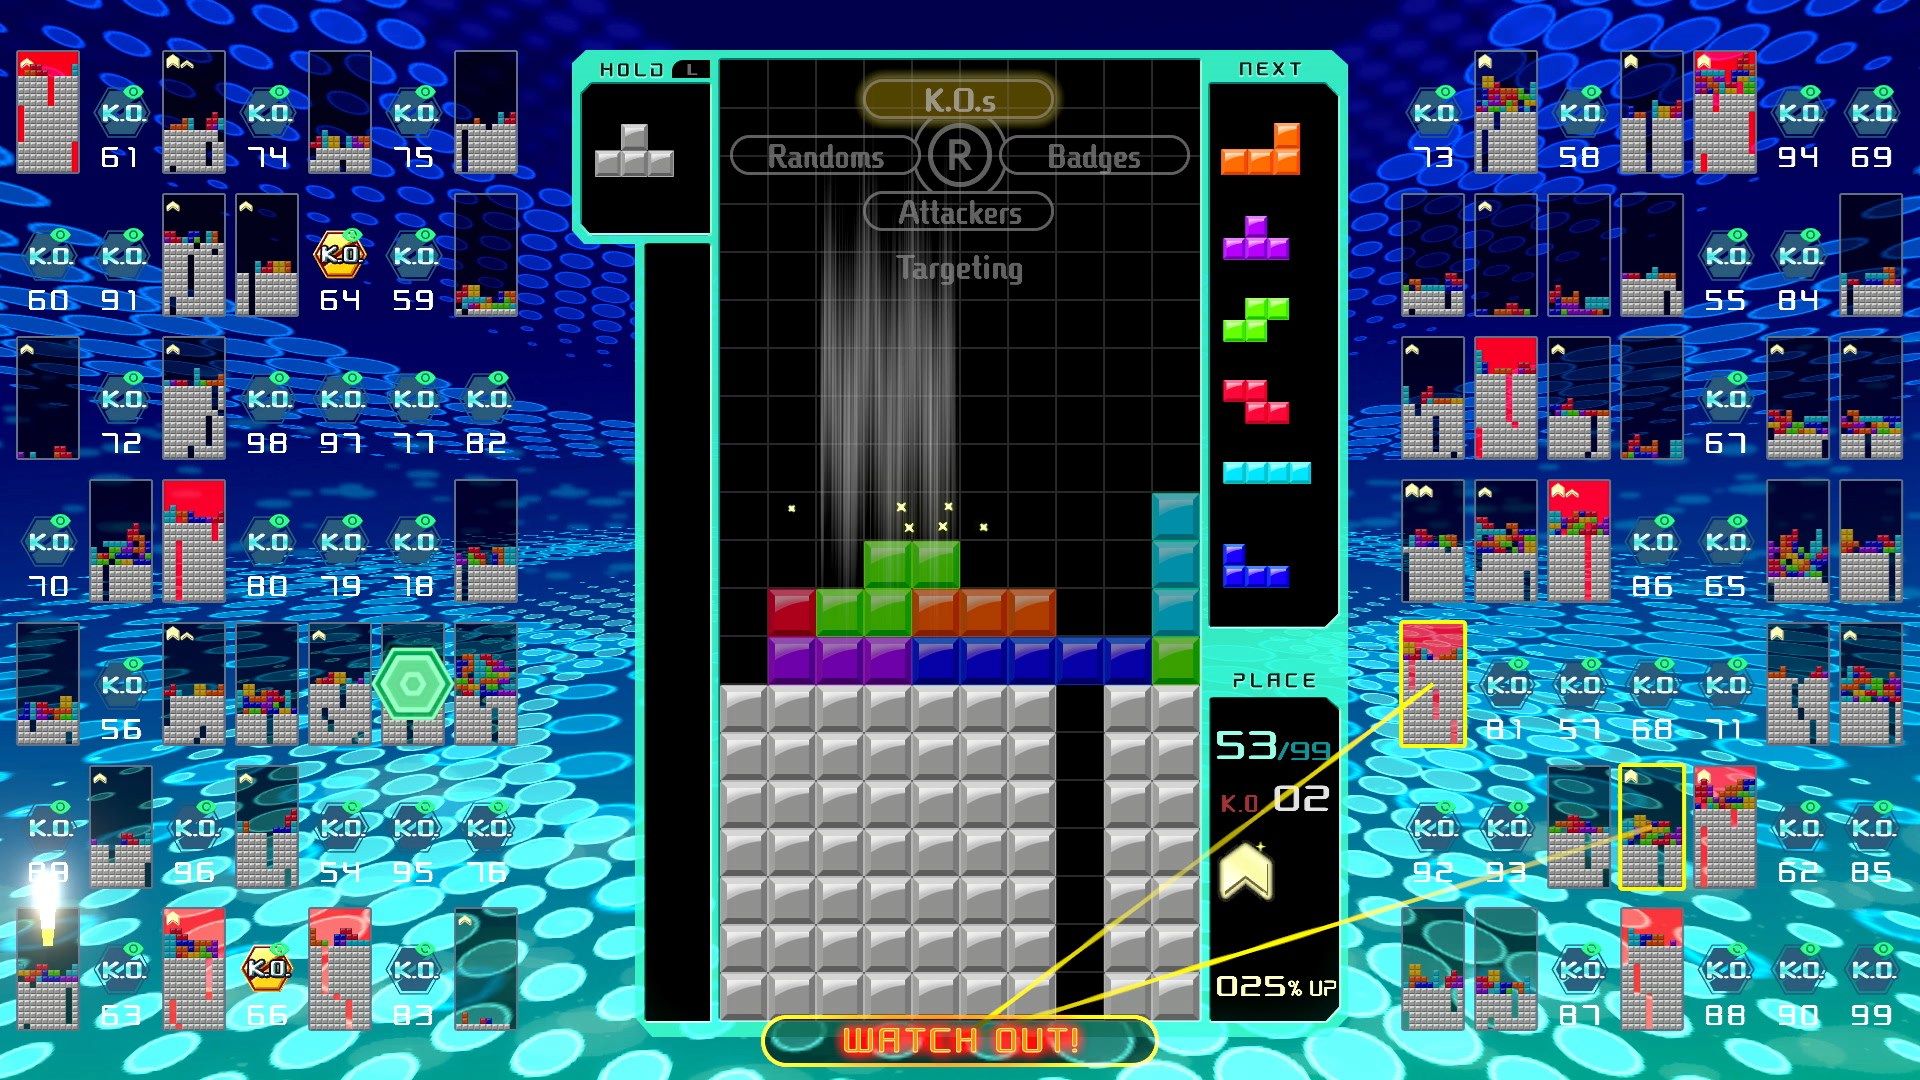 Nintendo Switch Online at 9.8 Million Accounts, 'Tetris 99' Popular